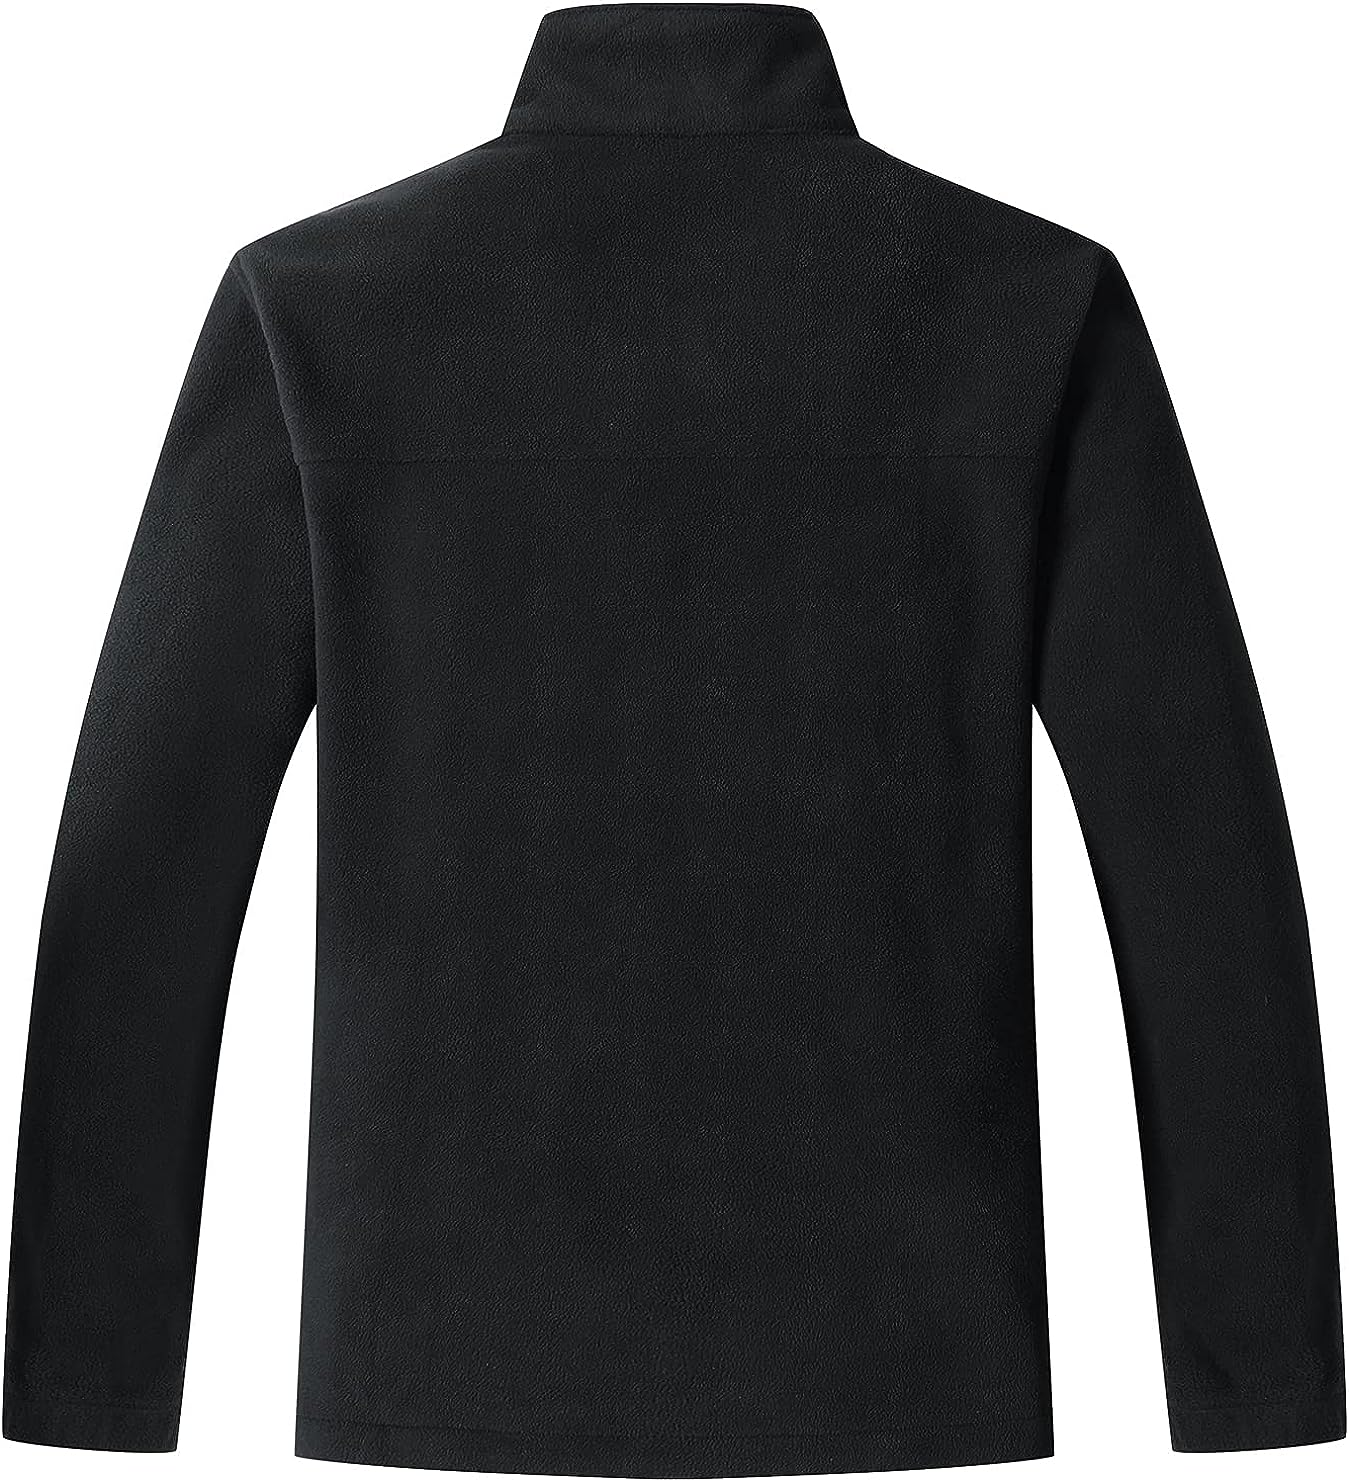 Wholesale Men's Full Zip Thermal Jackets With Pockets Soft Polar Fleece Coat - Black